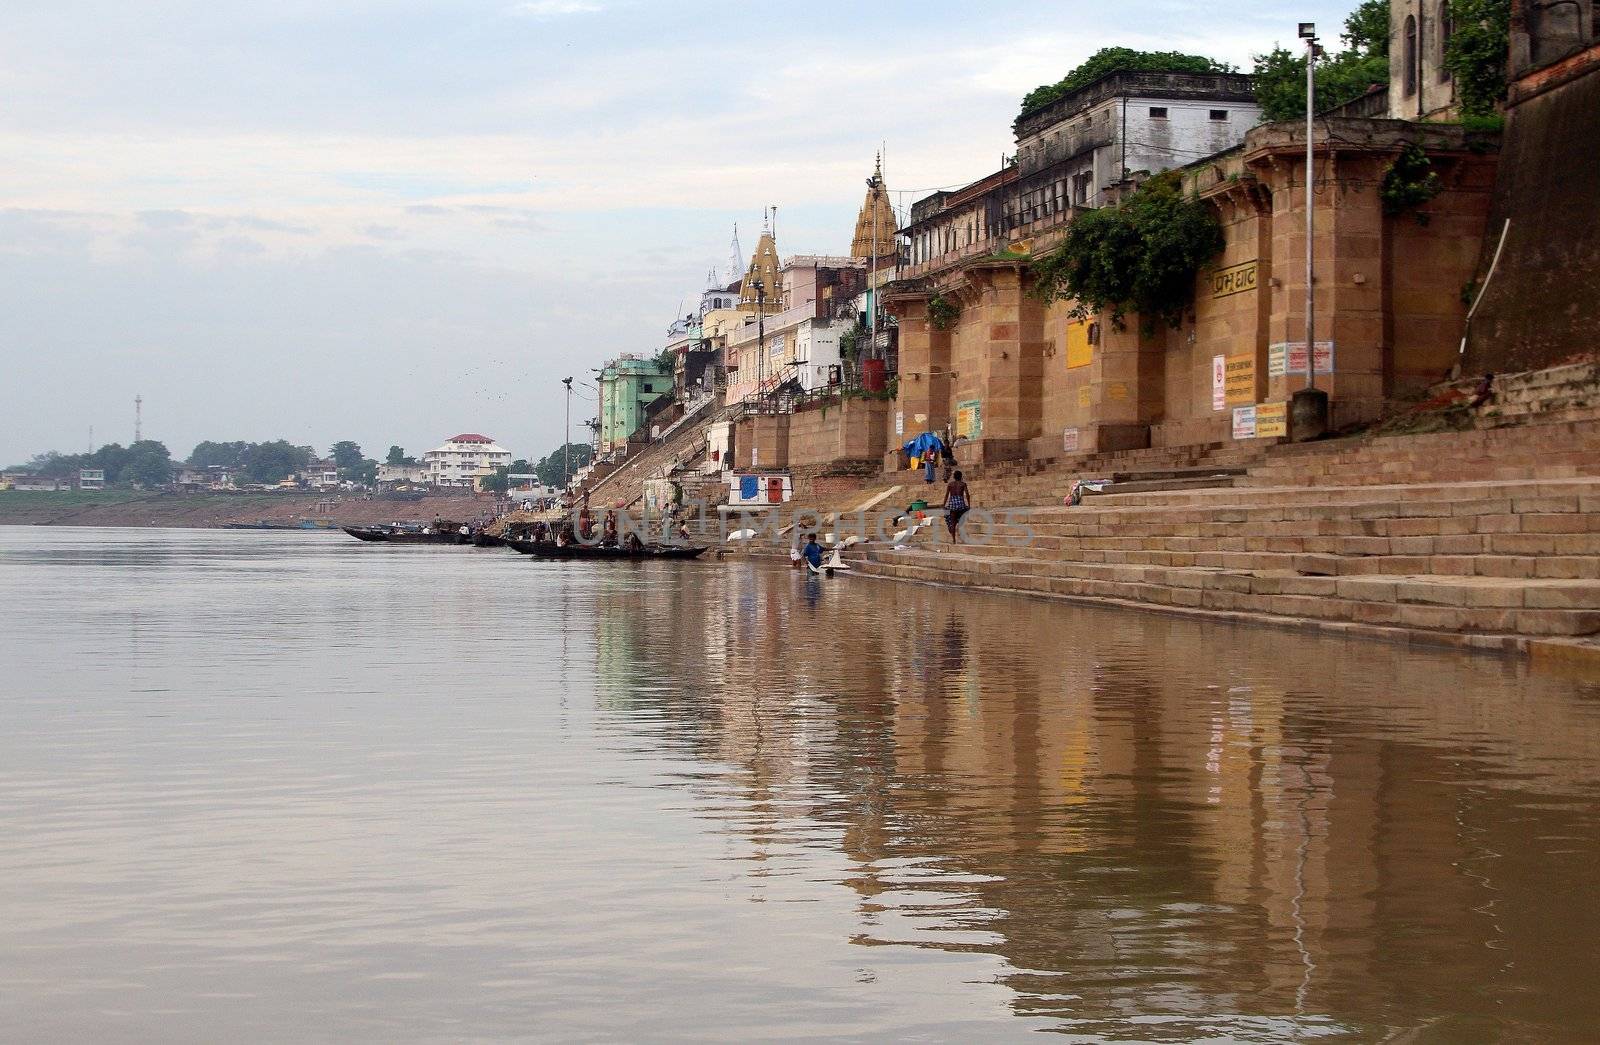 Ganga River - Varanasi - India - holy place for all hindu people